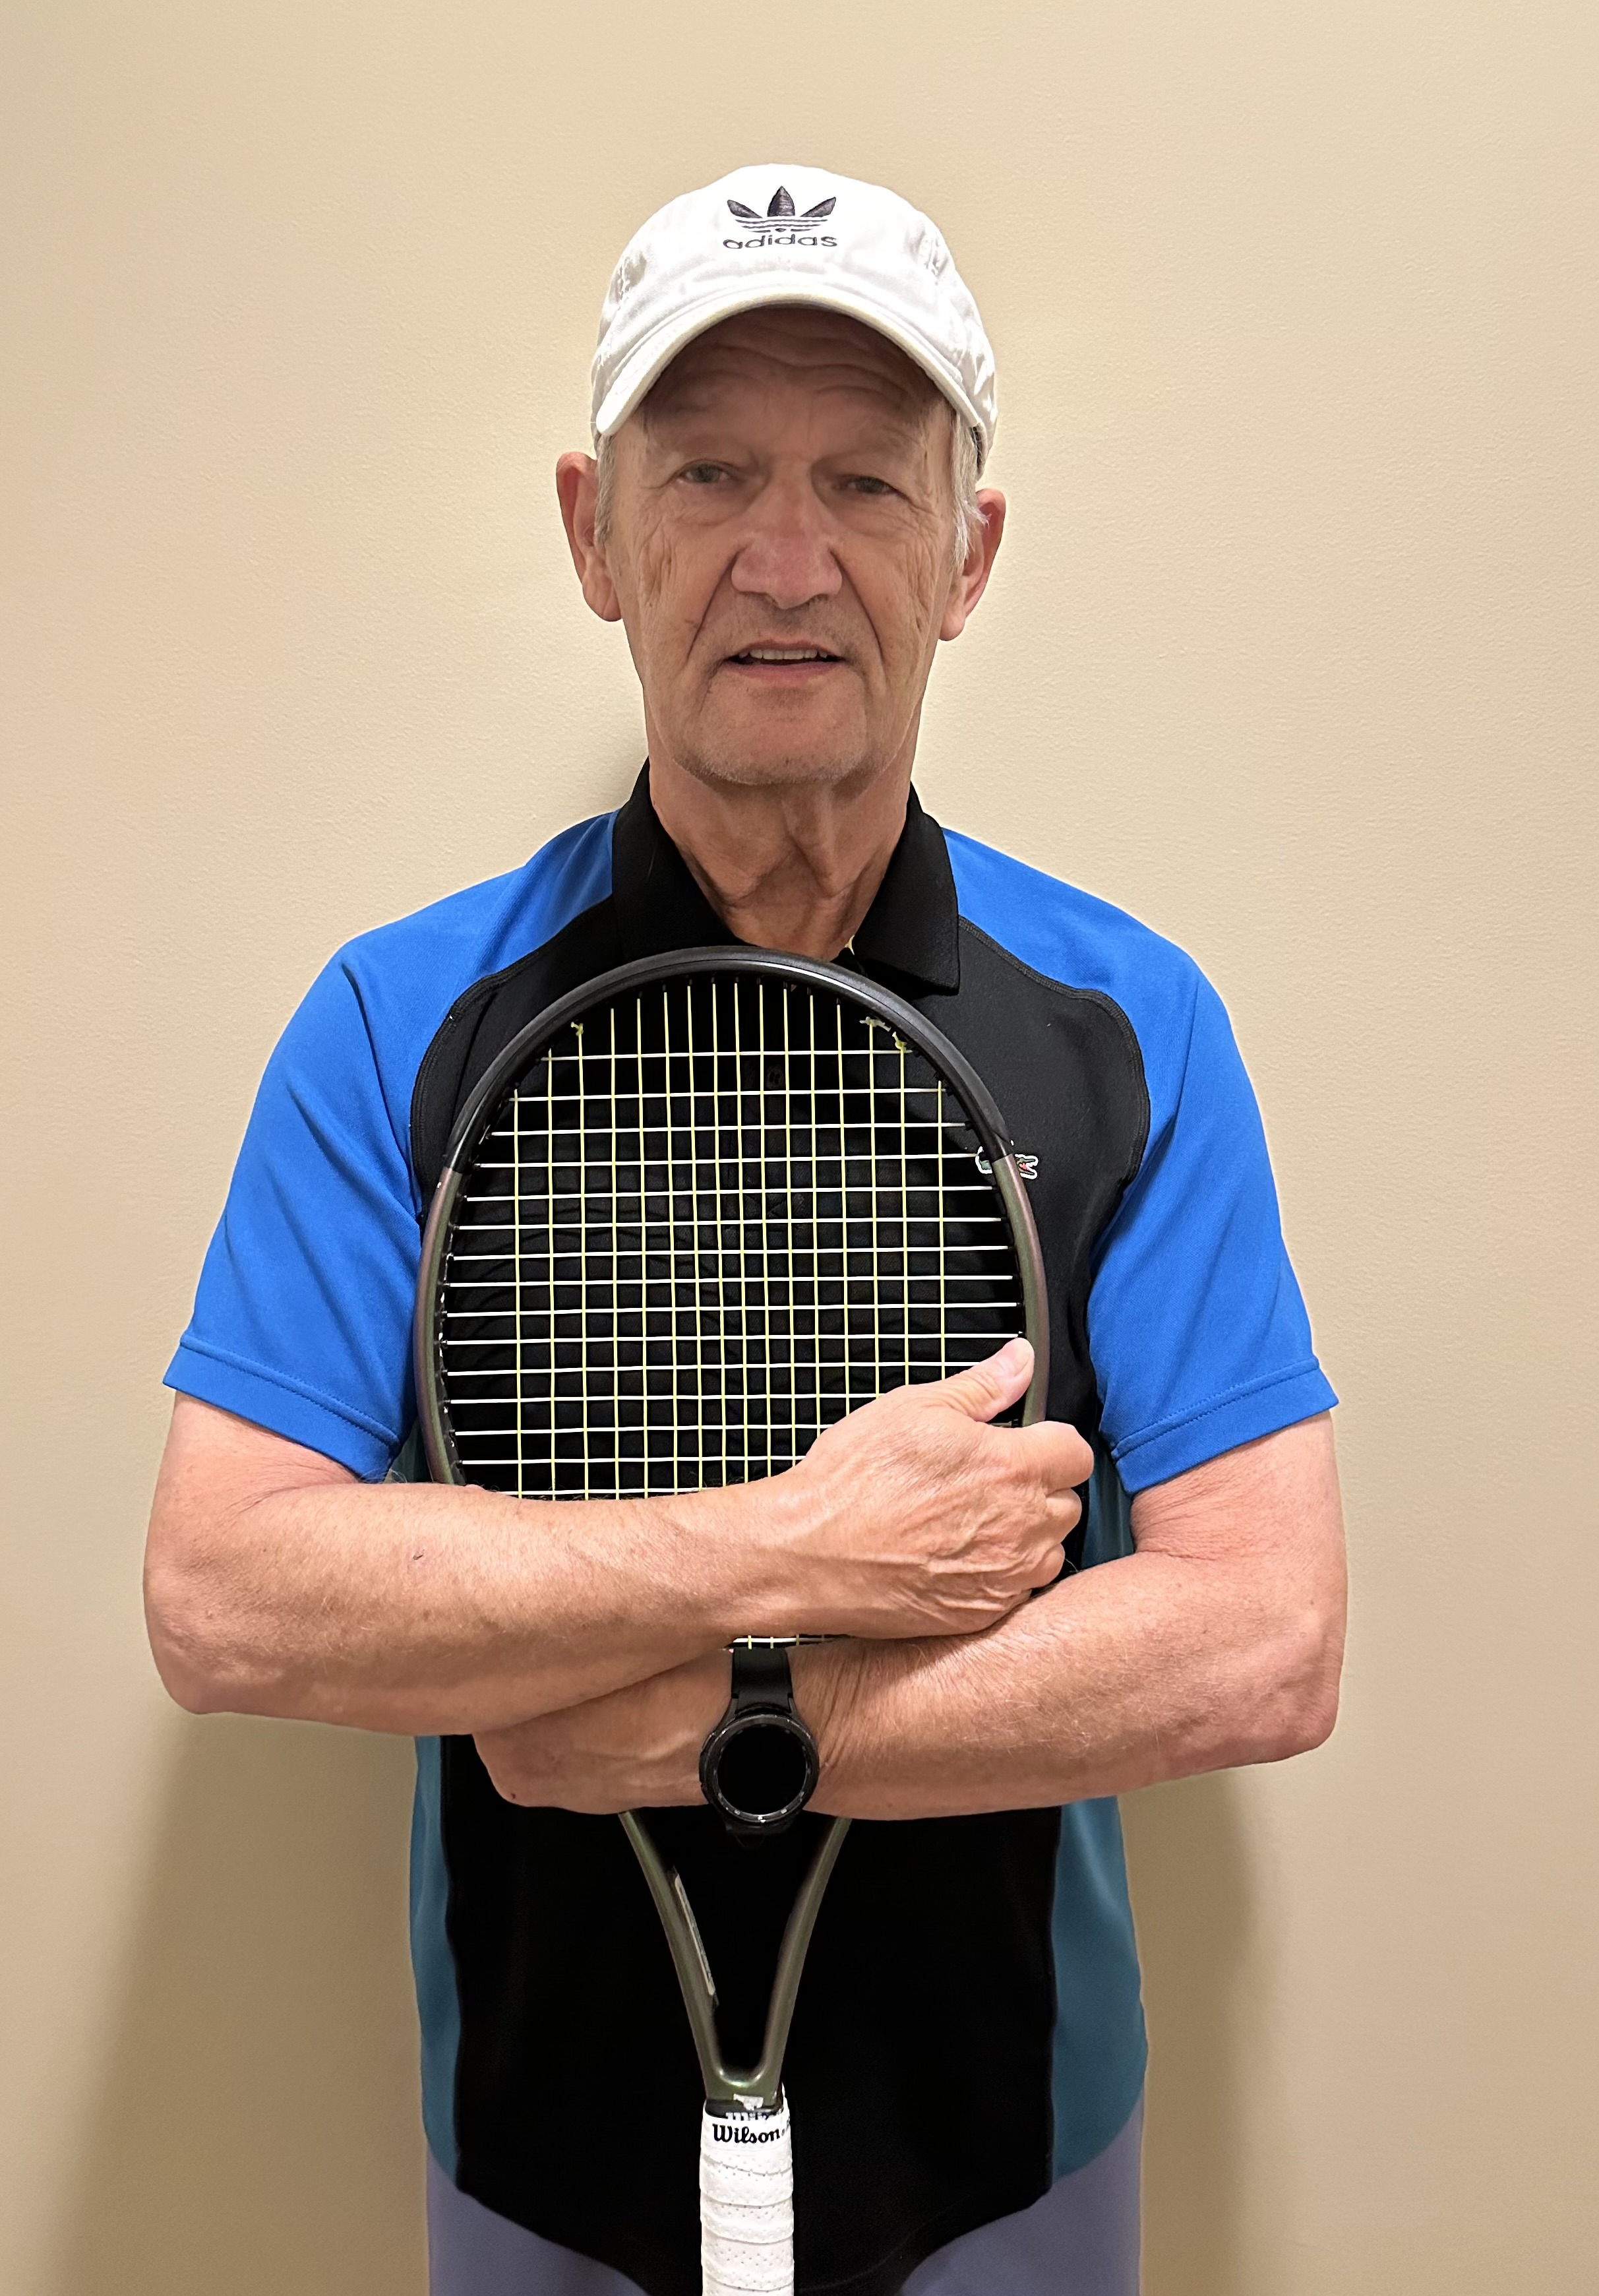 Michael J. teaches tennis lessons in Arlington, VA